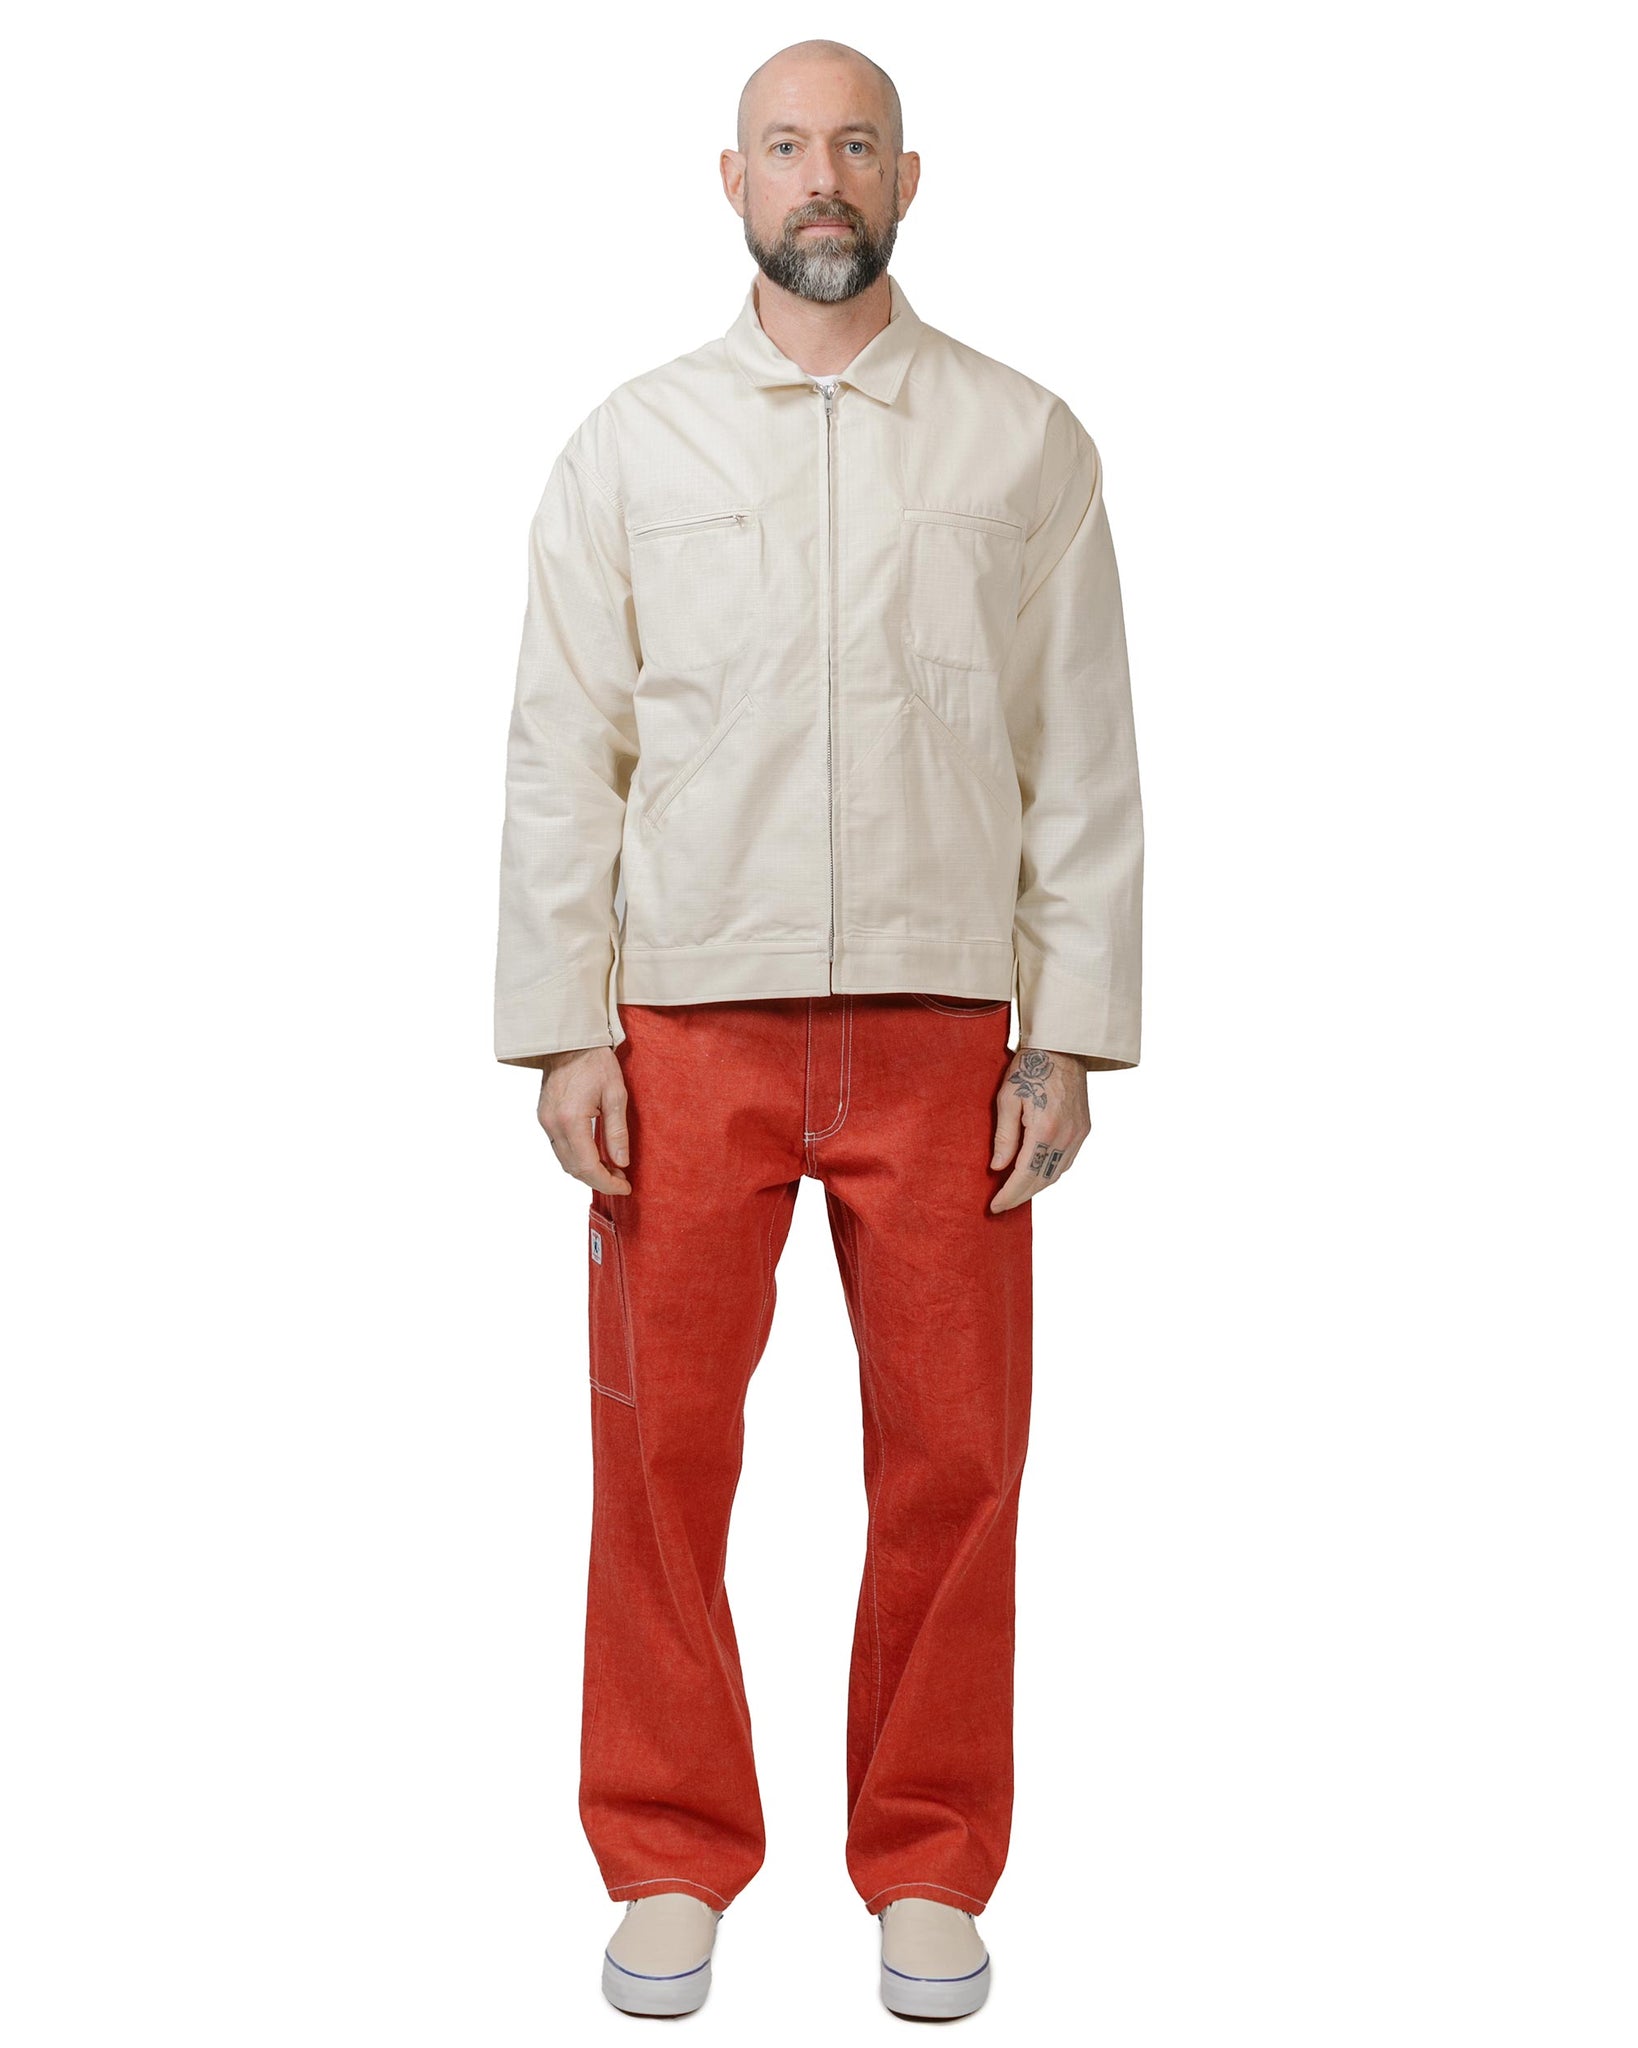 Randy's Garments Service Jacket Cotton Ripstop Natural model fulll